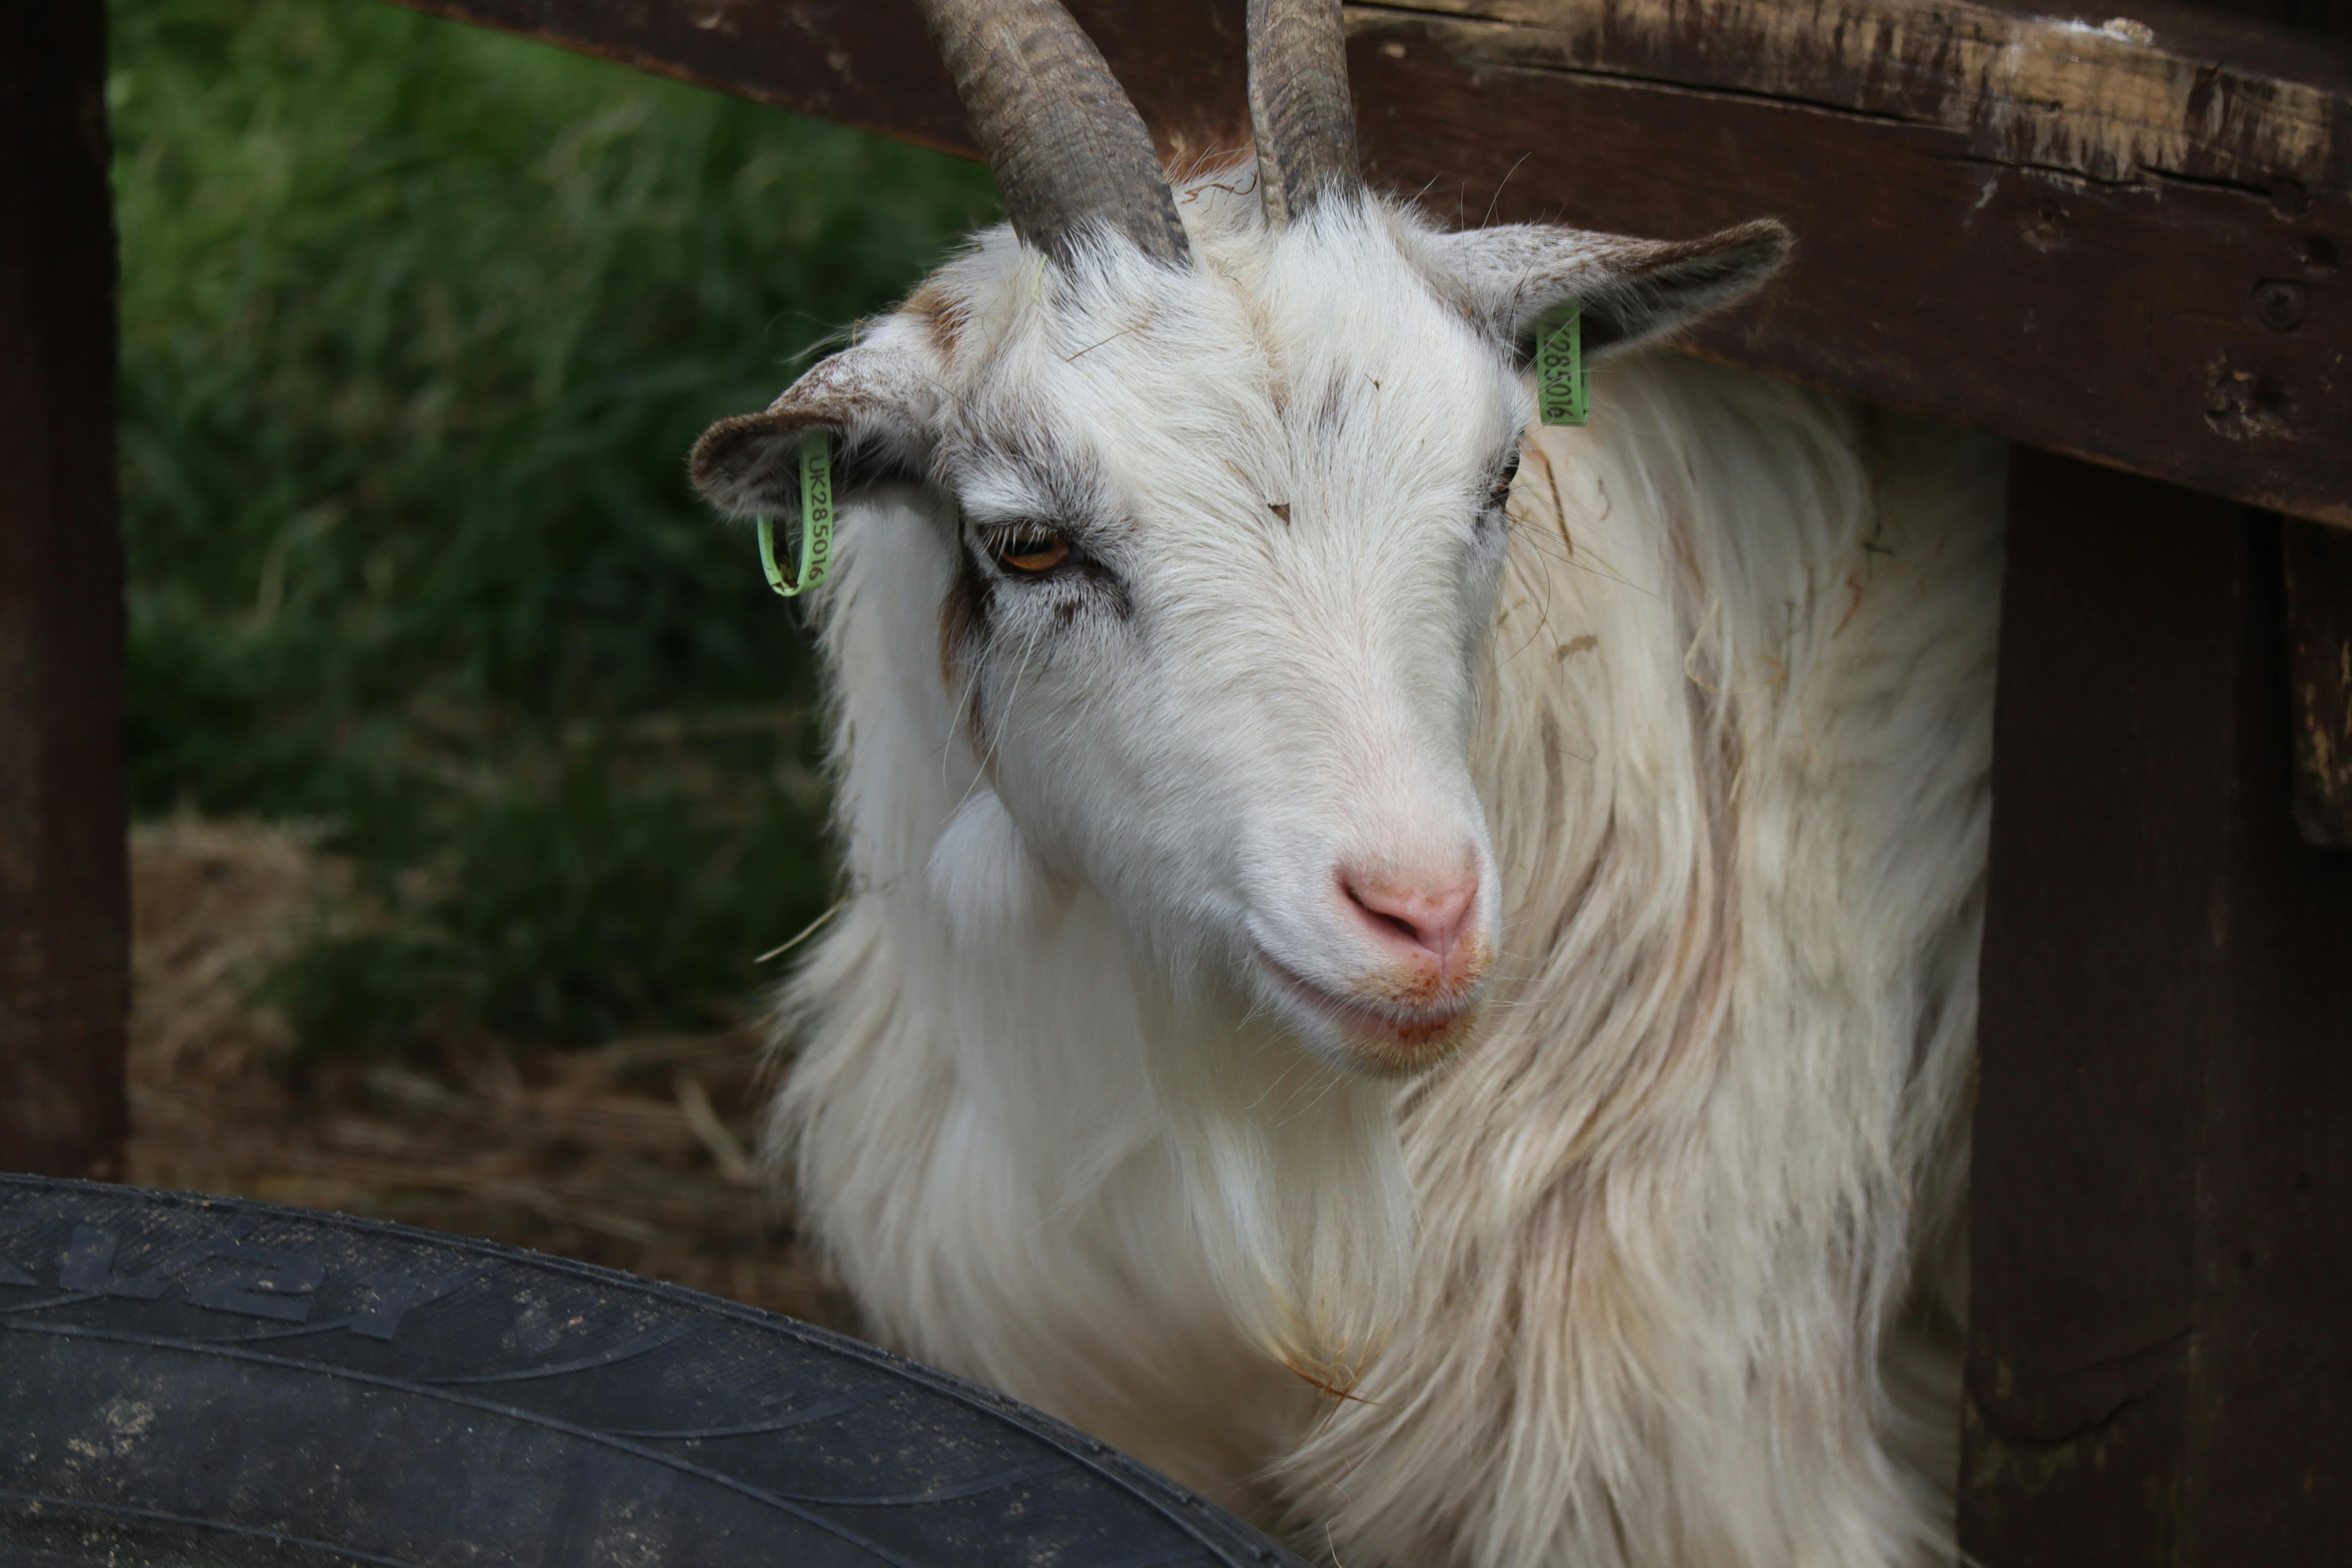 Gray Scale Photo of Goat · Free Stock Photo